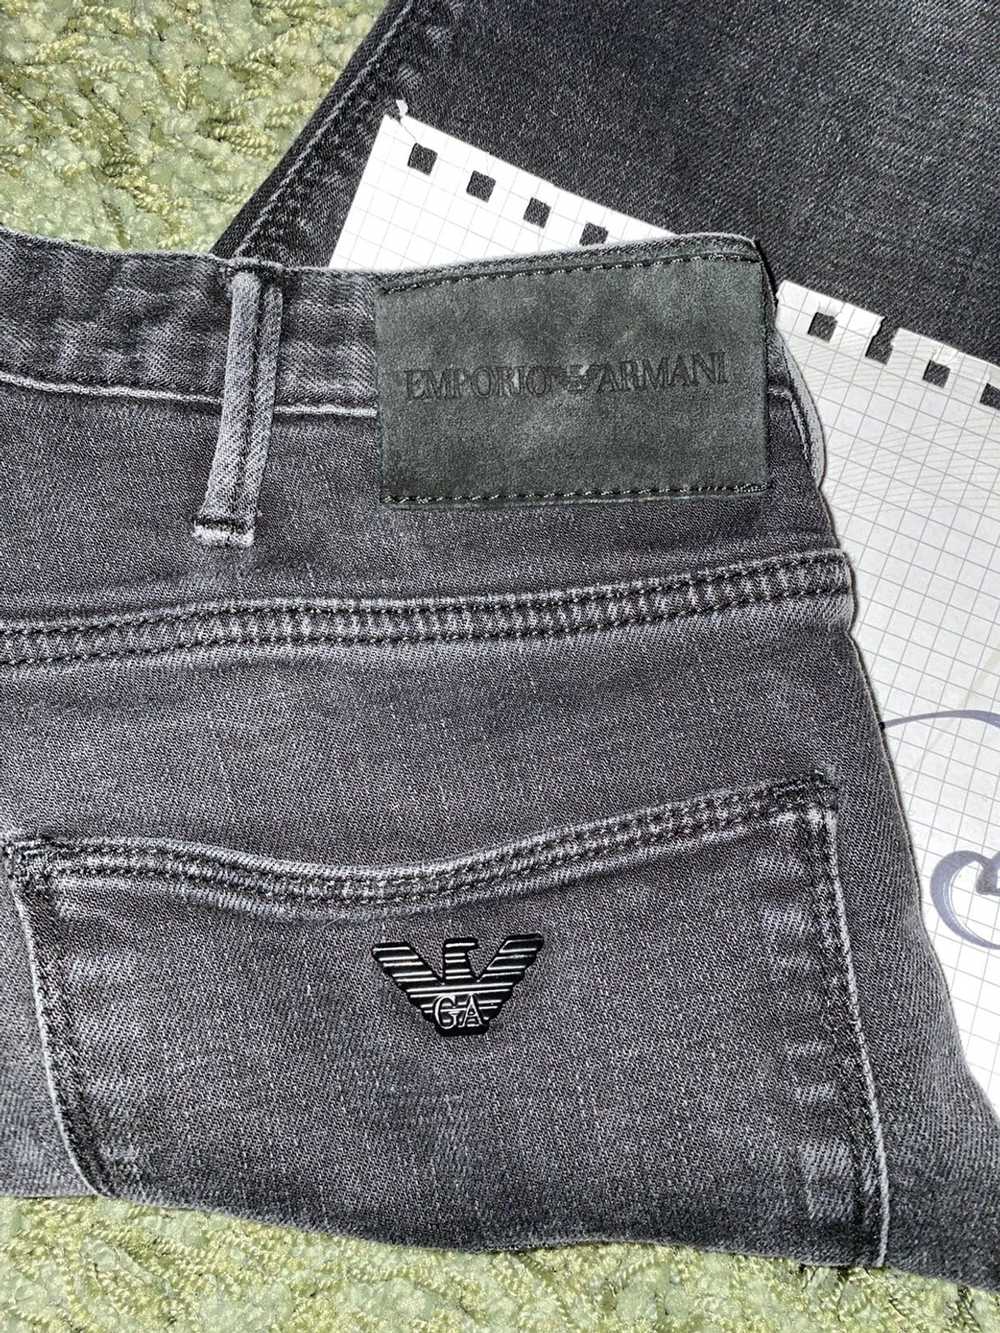 Emporio Armani Emporio Armani Black Jeans - image 3